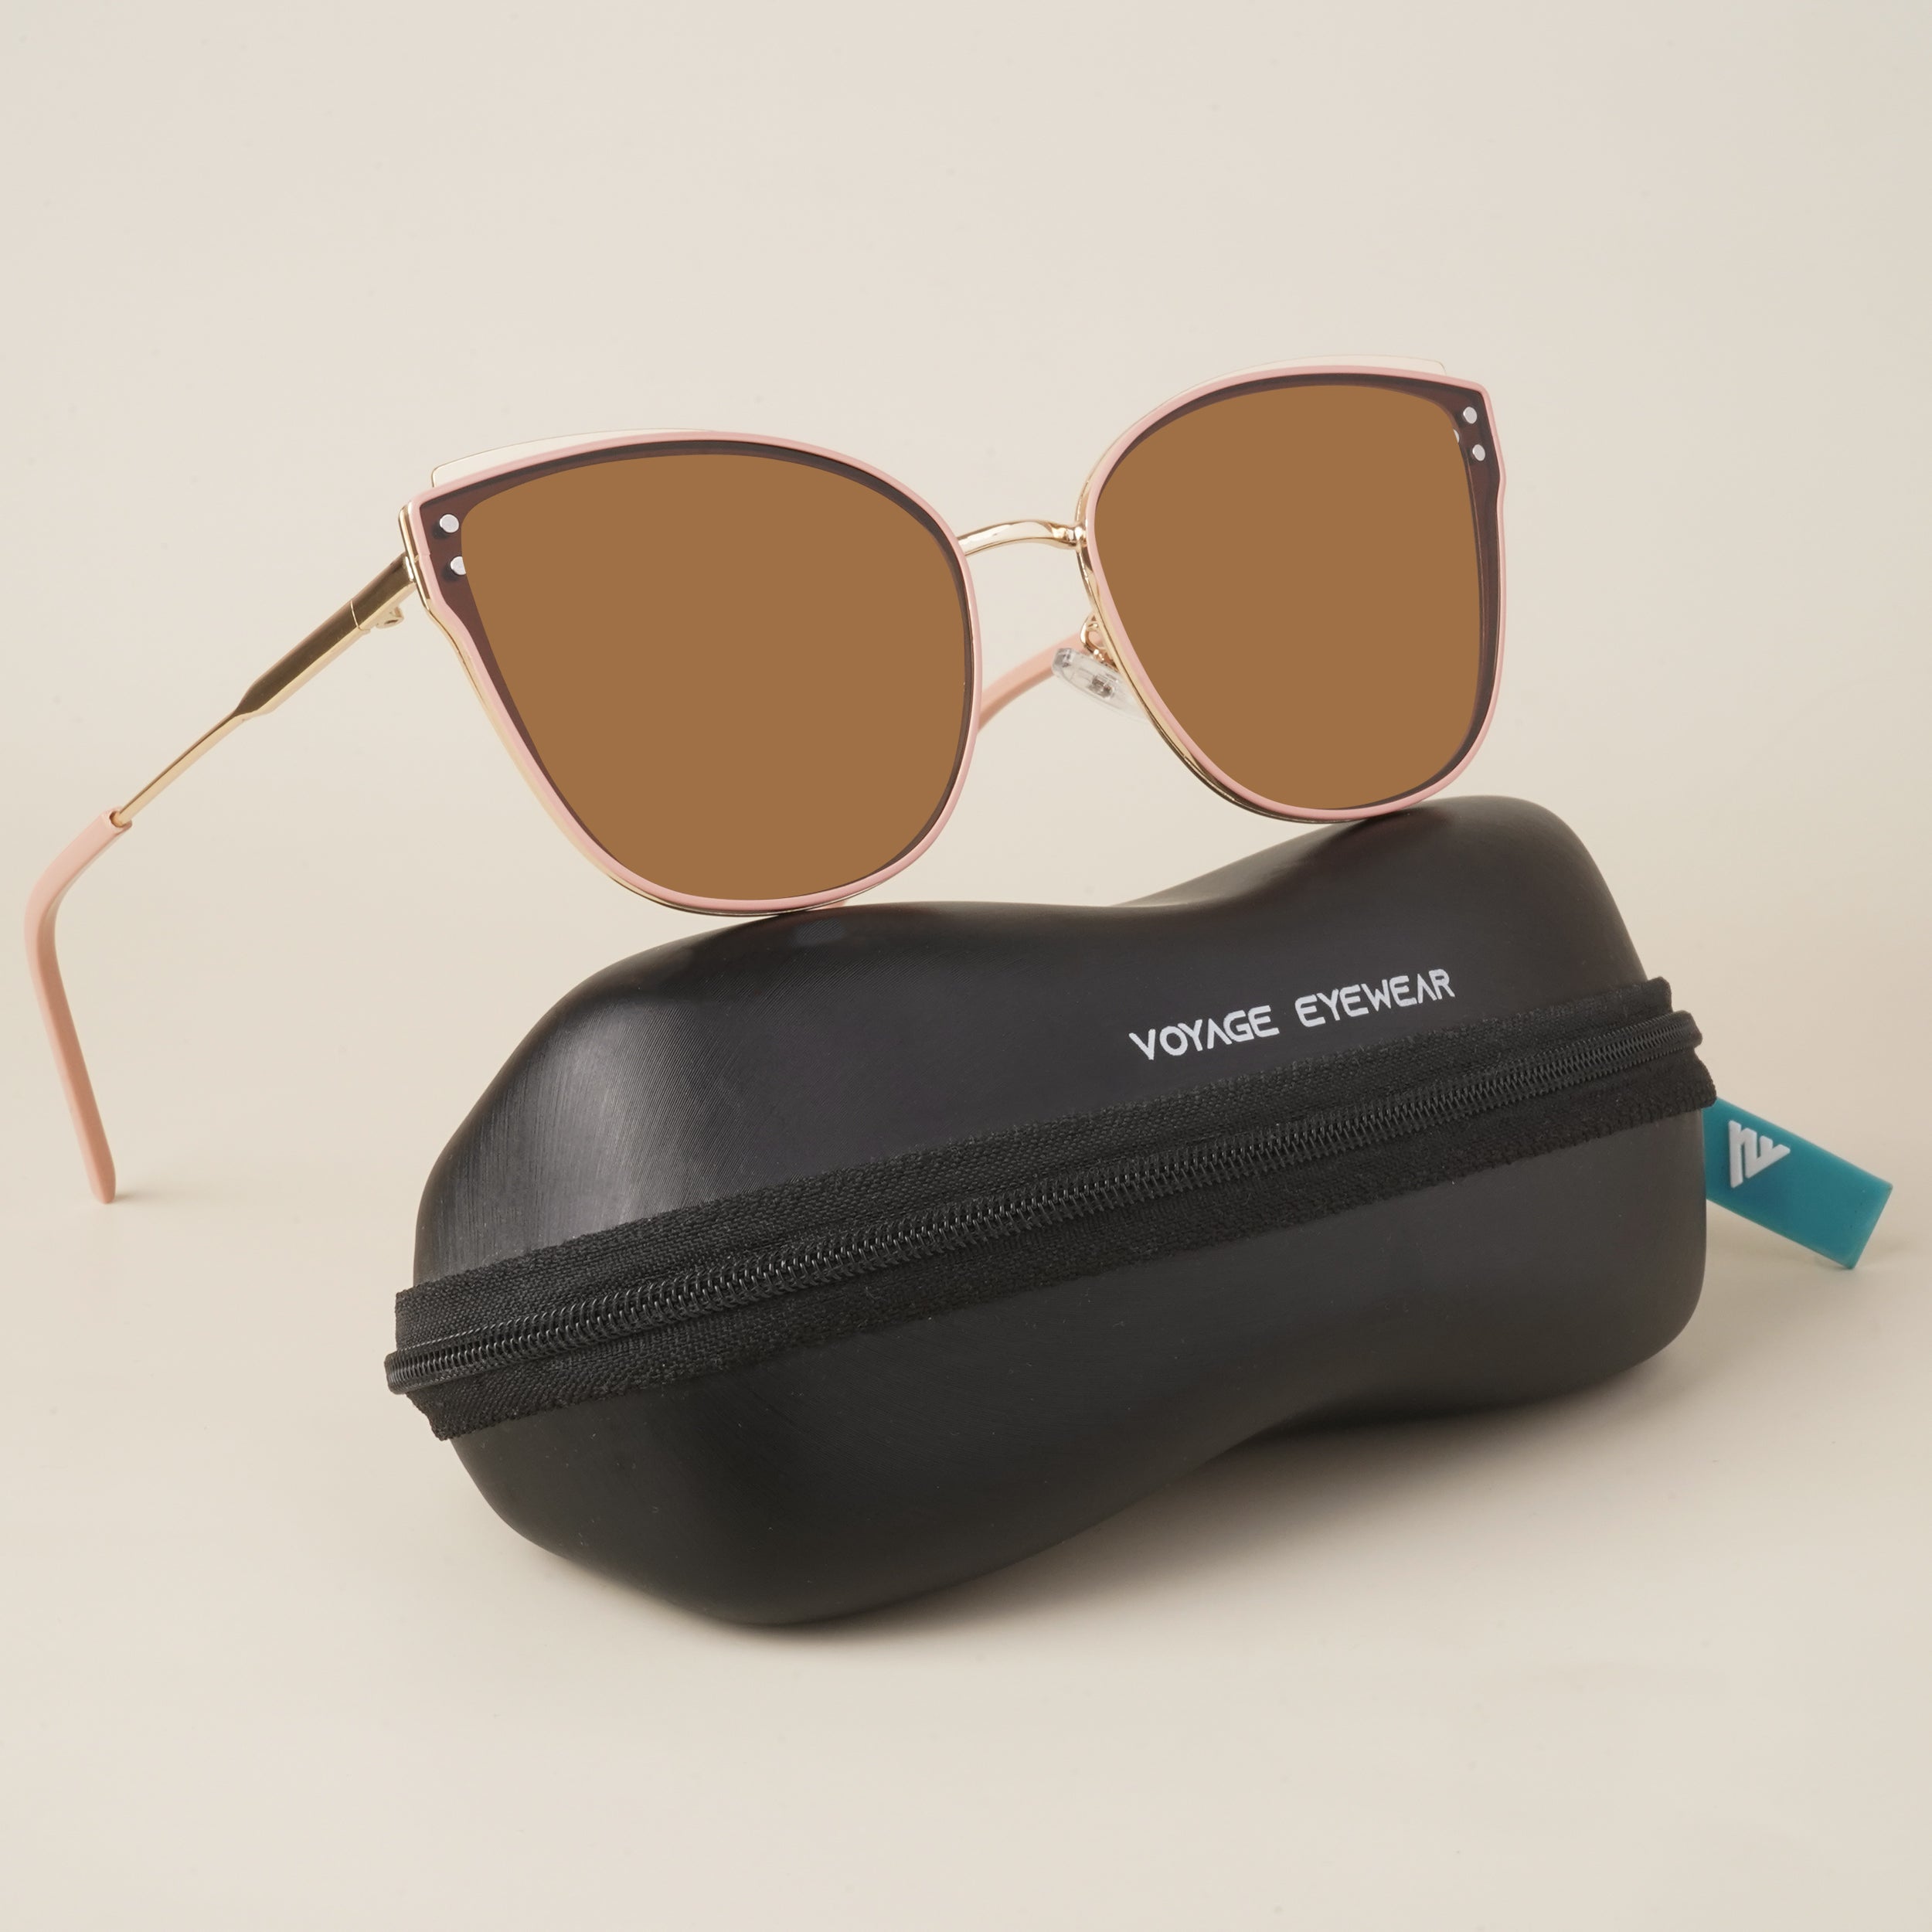 Voyage Cateye Brown Sunglasses - MG2858